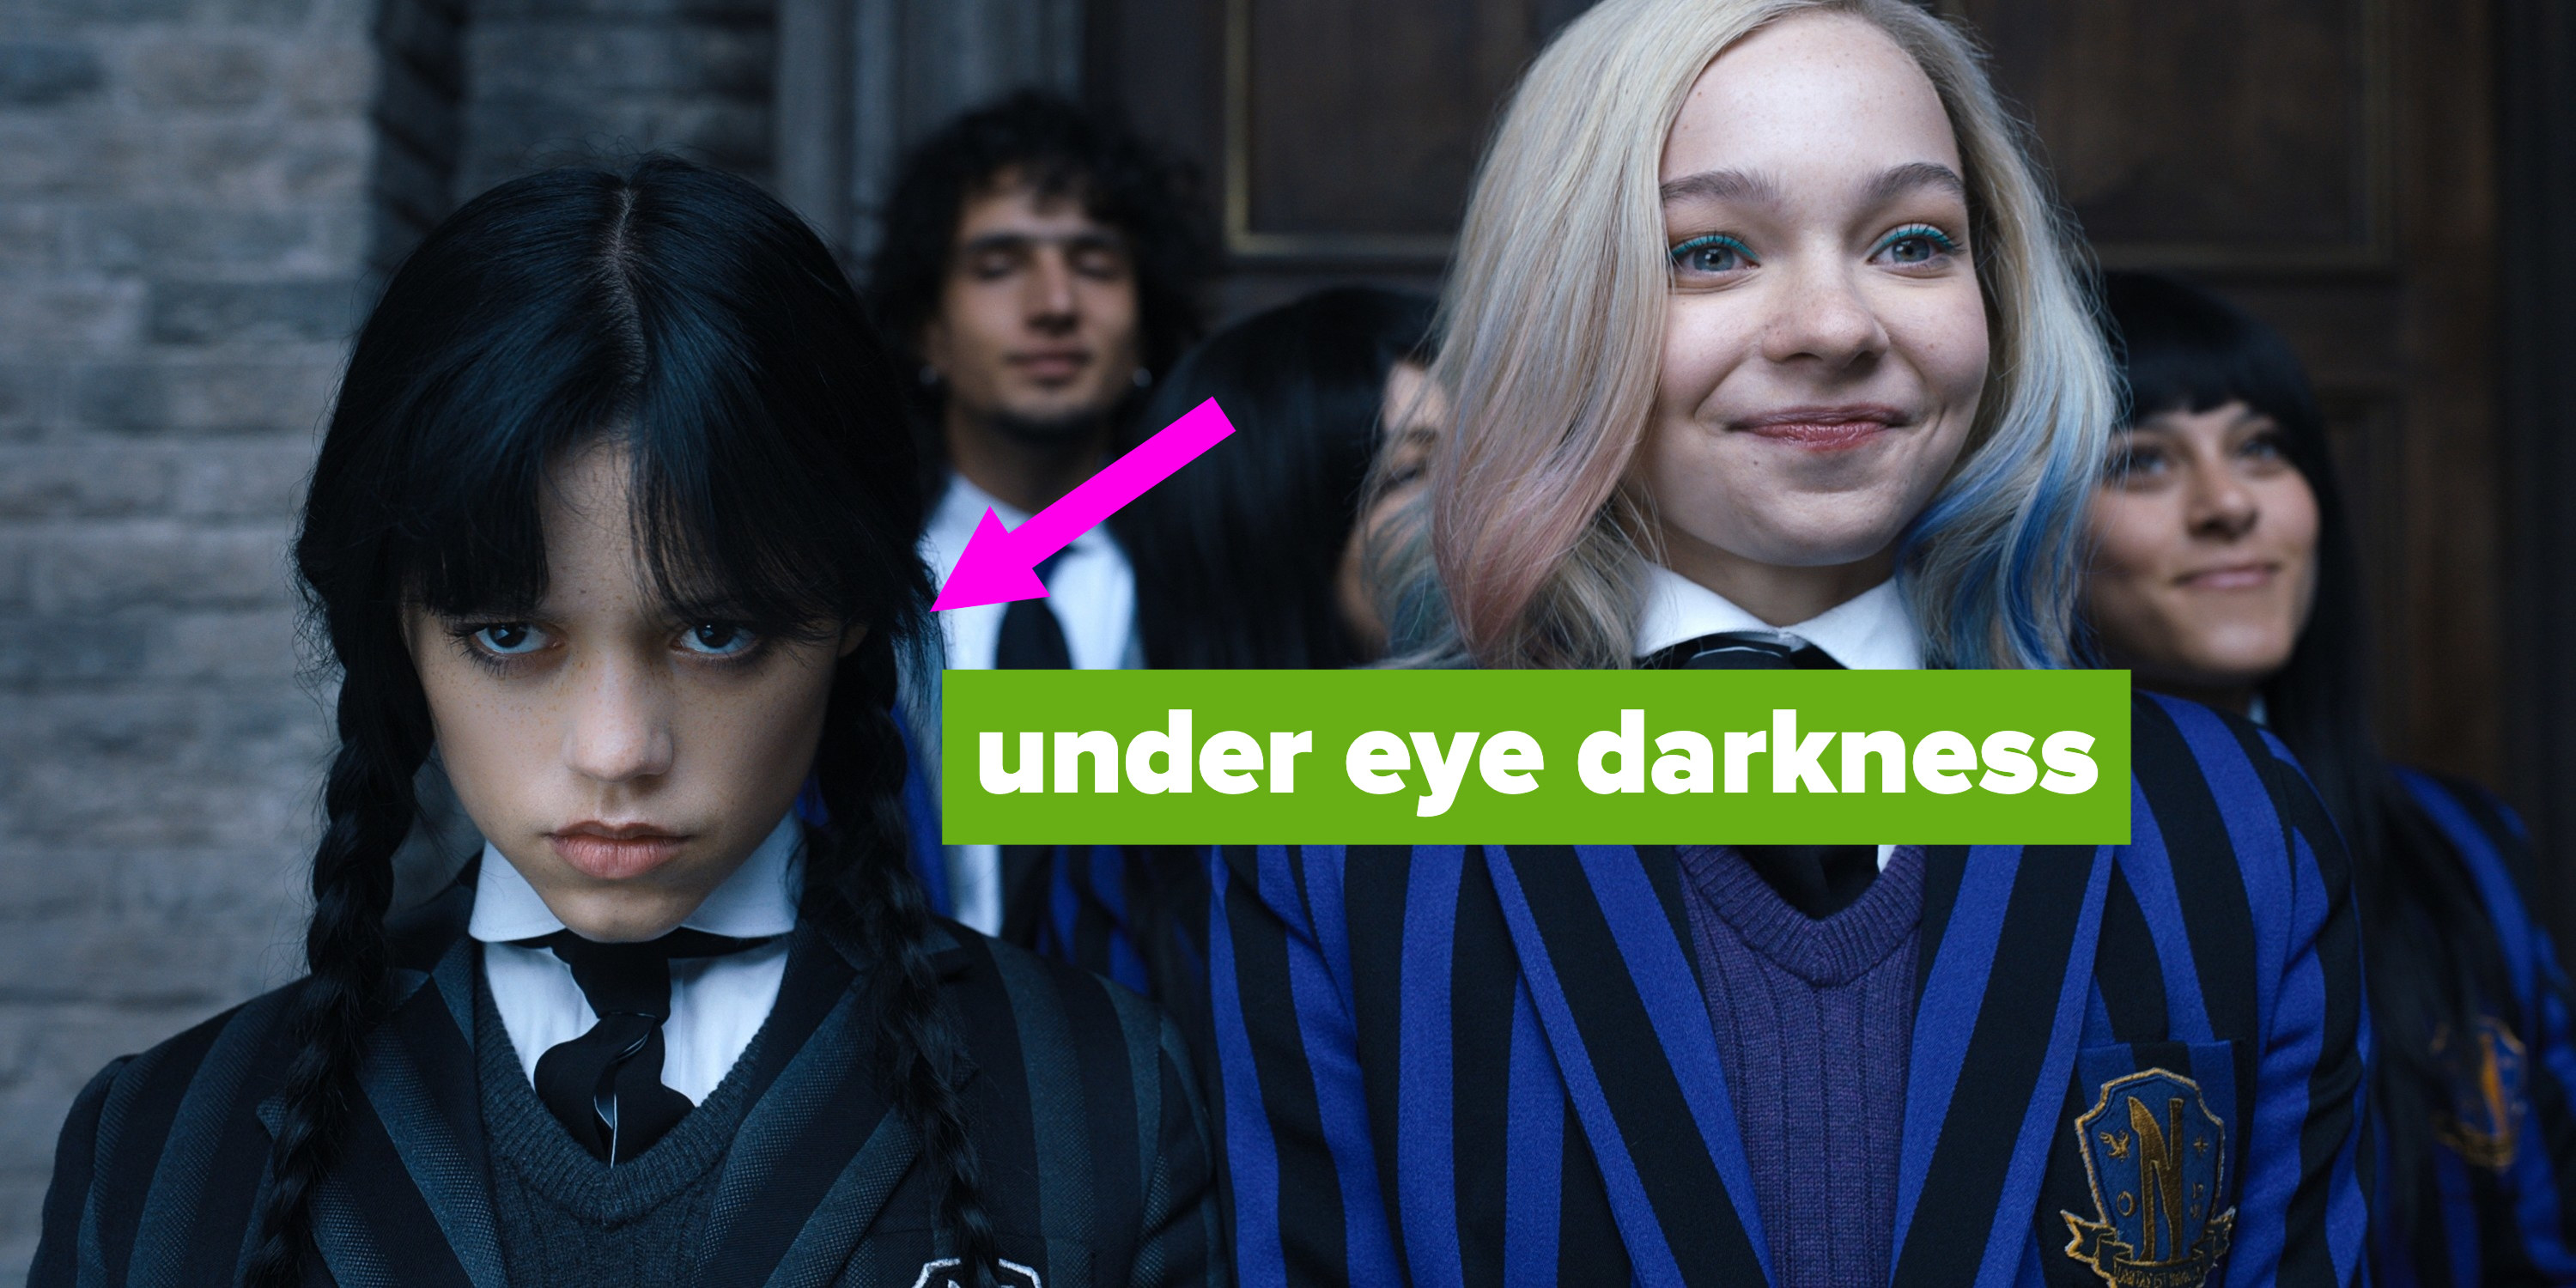 Wednesday Addams with dark circles around her eyes